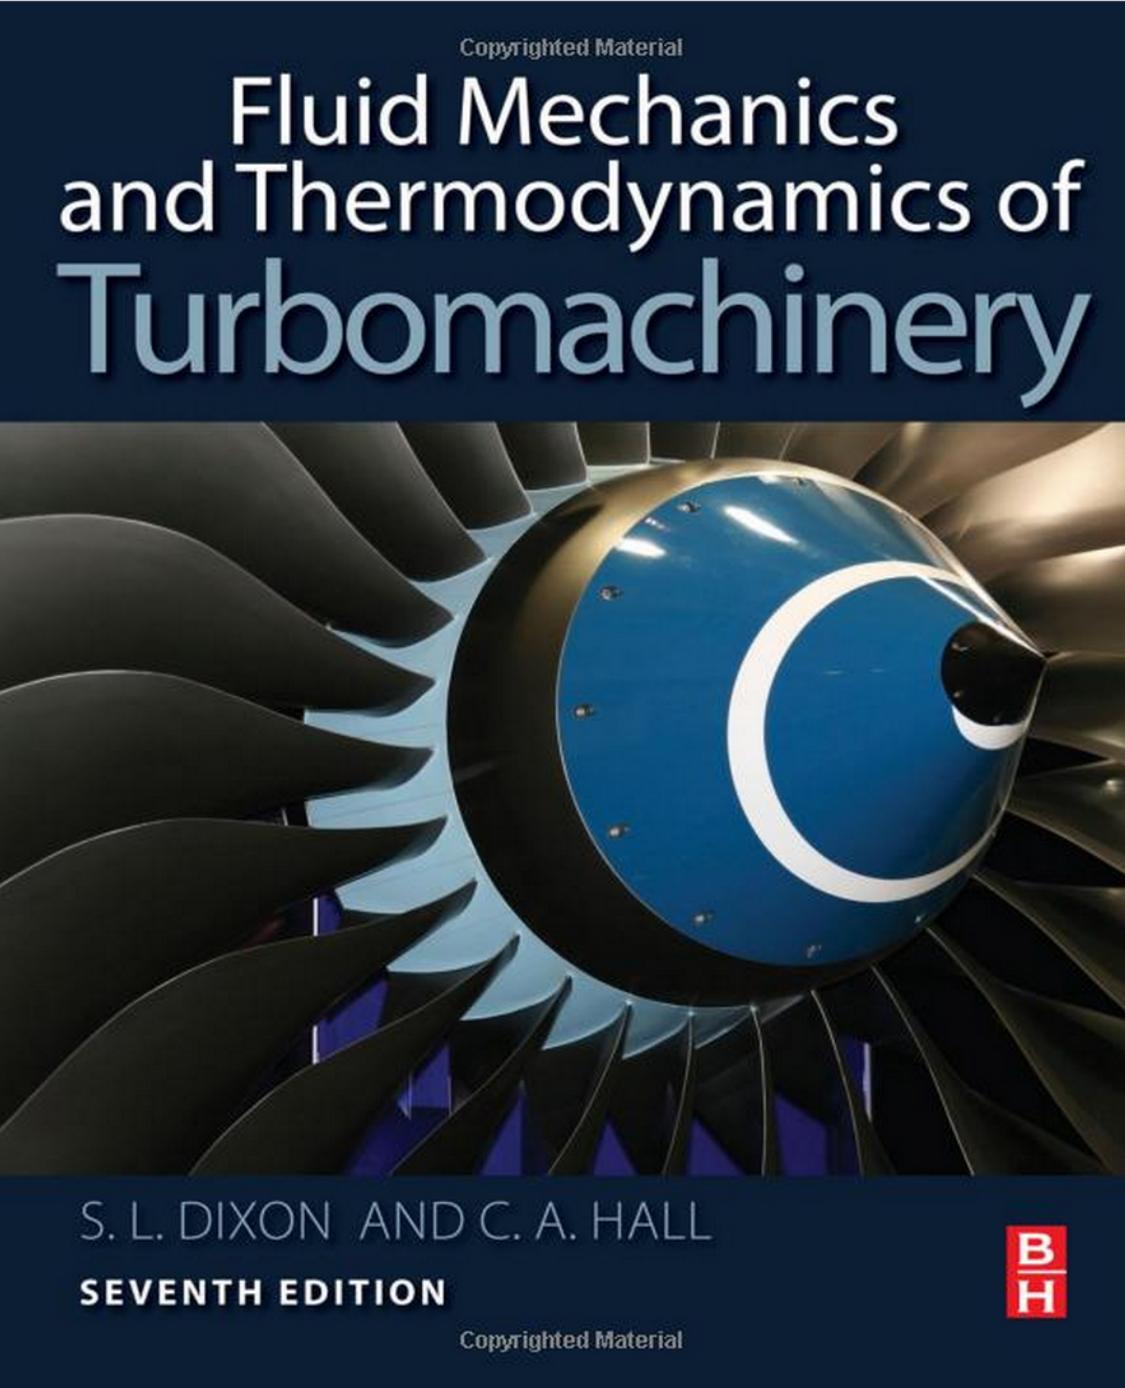 Fluid Mechanics and Thermodynamics of Turbomachinery 7th Edition.jpg